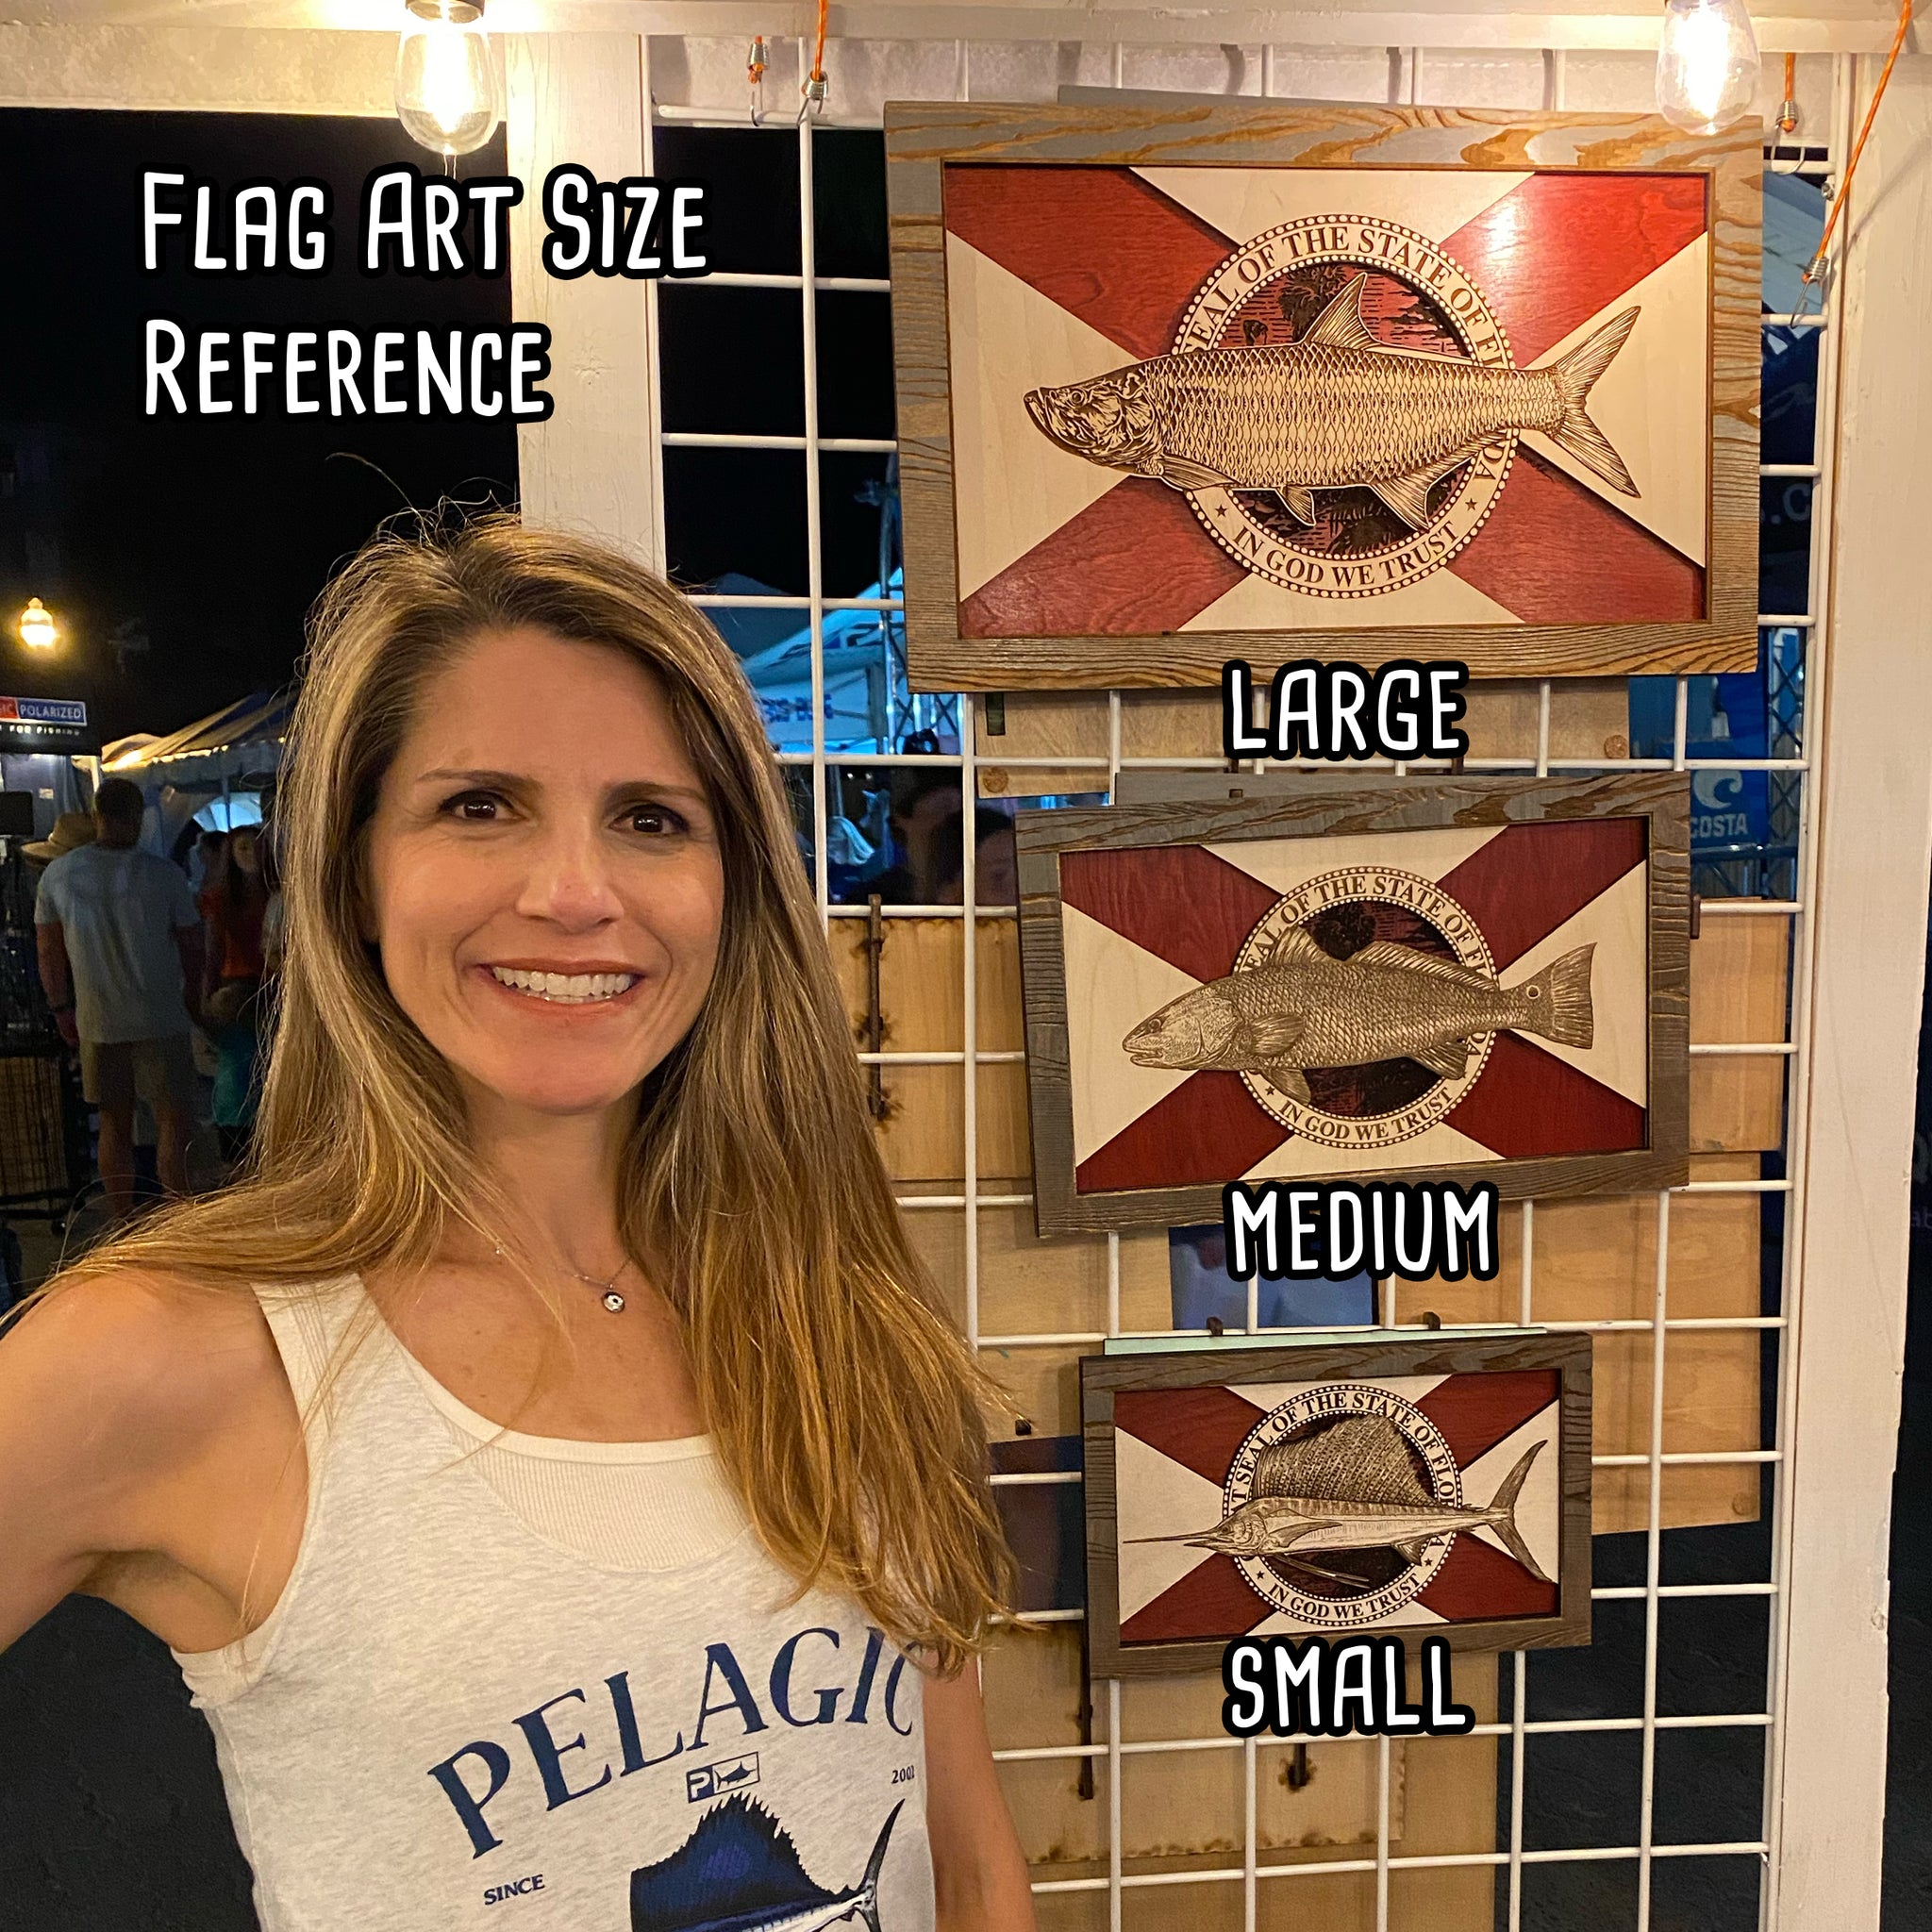 Wall Art - Redfish Florida Flag 3D Wood Art